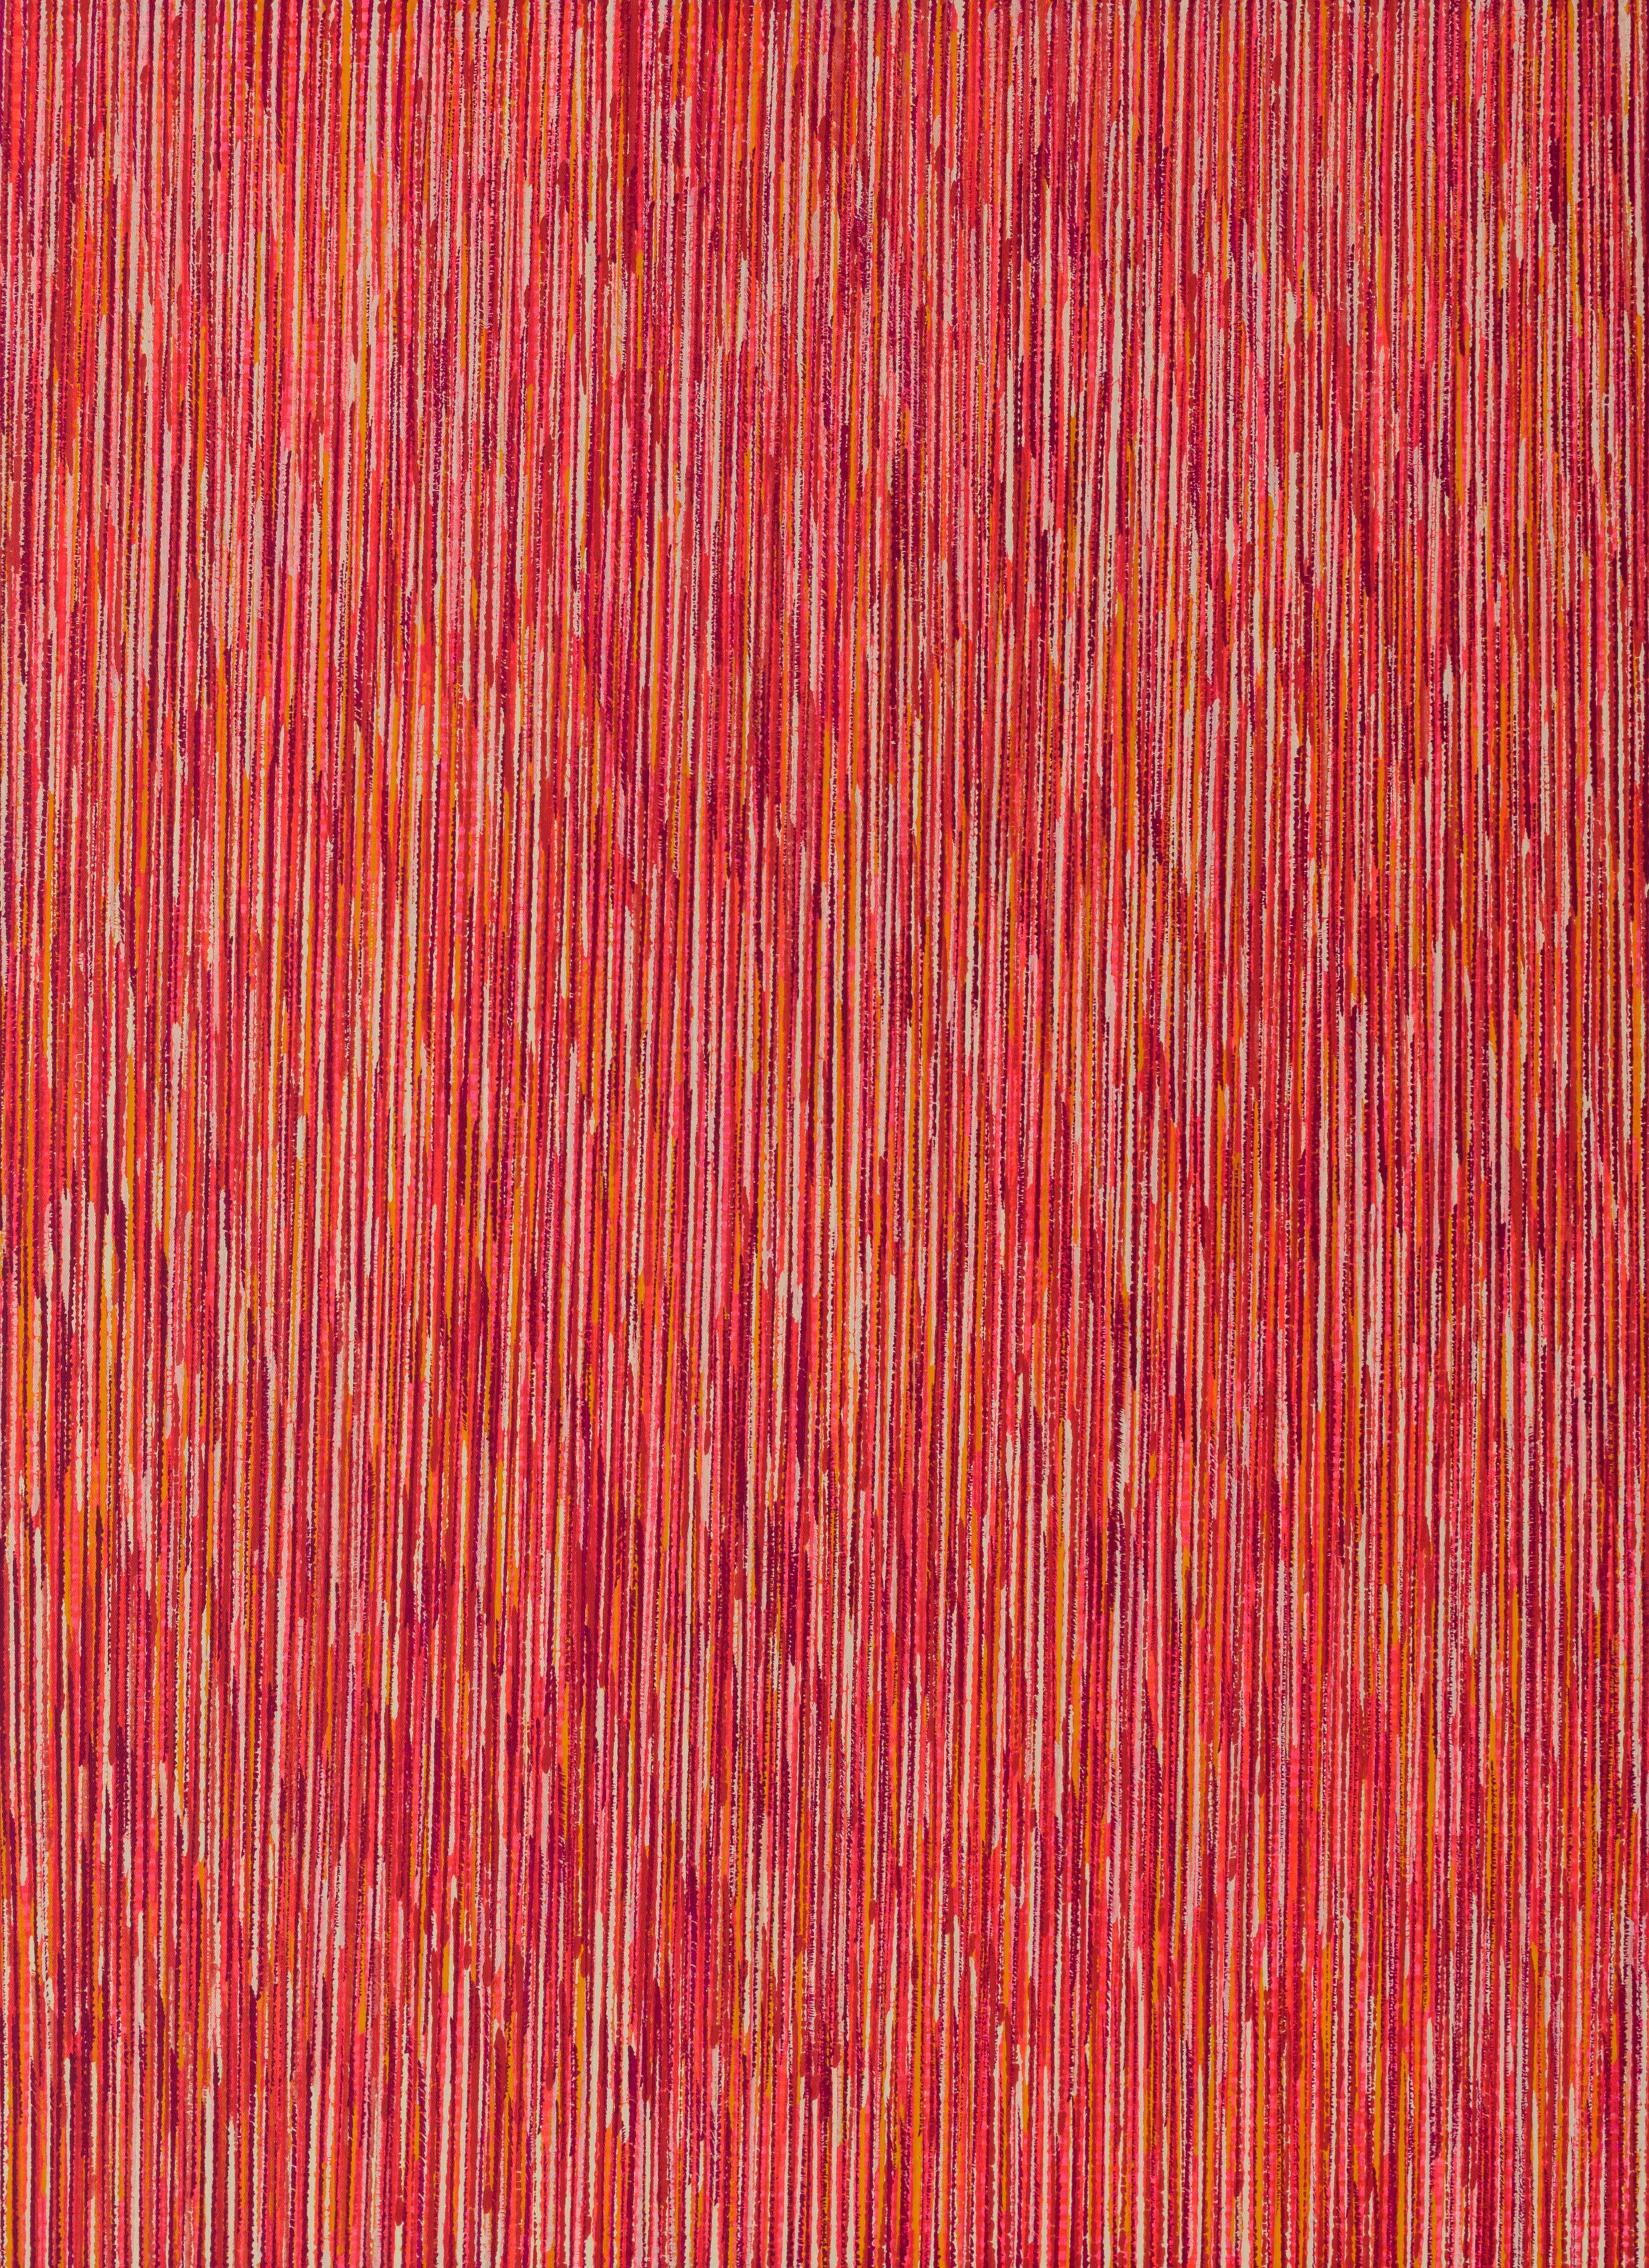 Nikola Dimitrov, Synapsen RotRaum, 2017, Pigmente, Bindemittel auf Leinwand, 110 × 80 cm